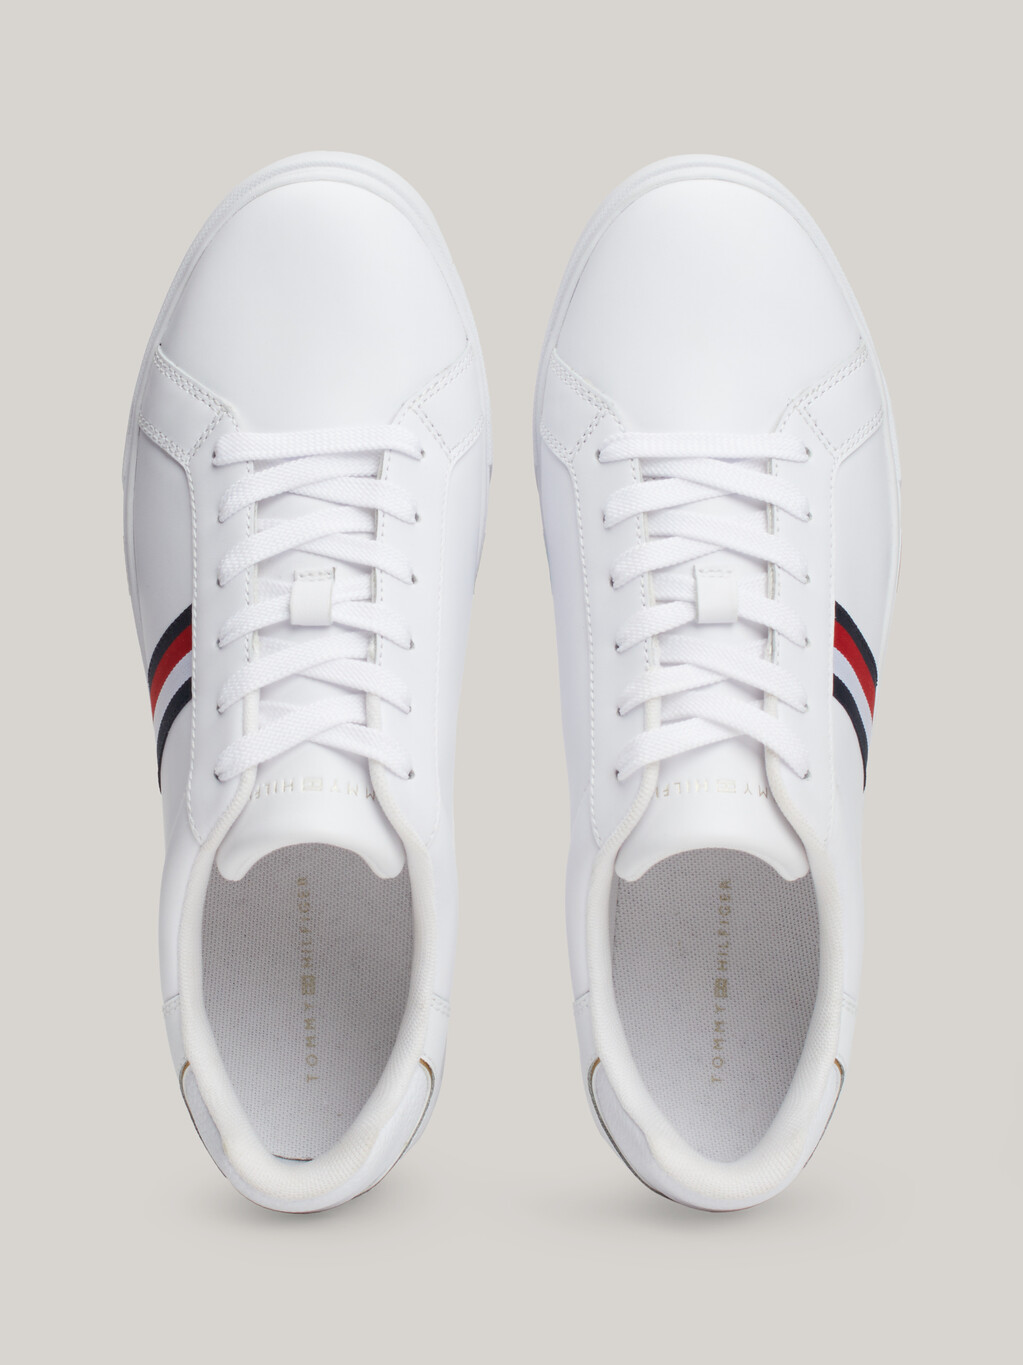 Essential 皮革標誌飾邊網球運動鞋, White, hi-res